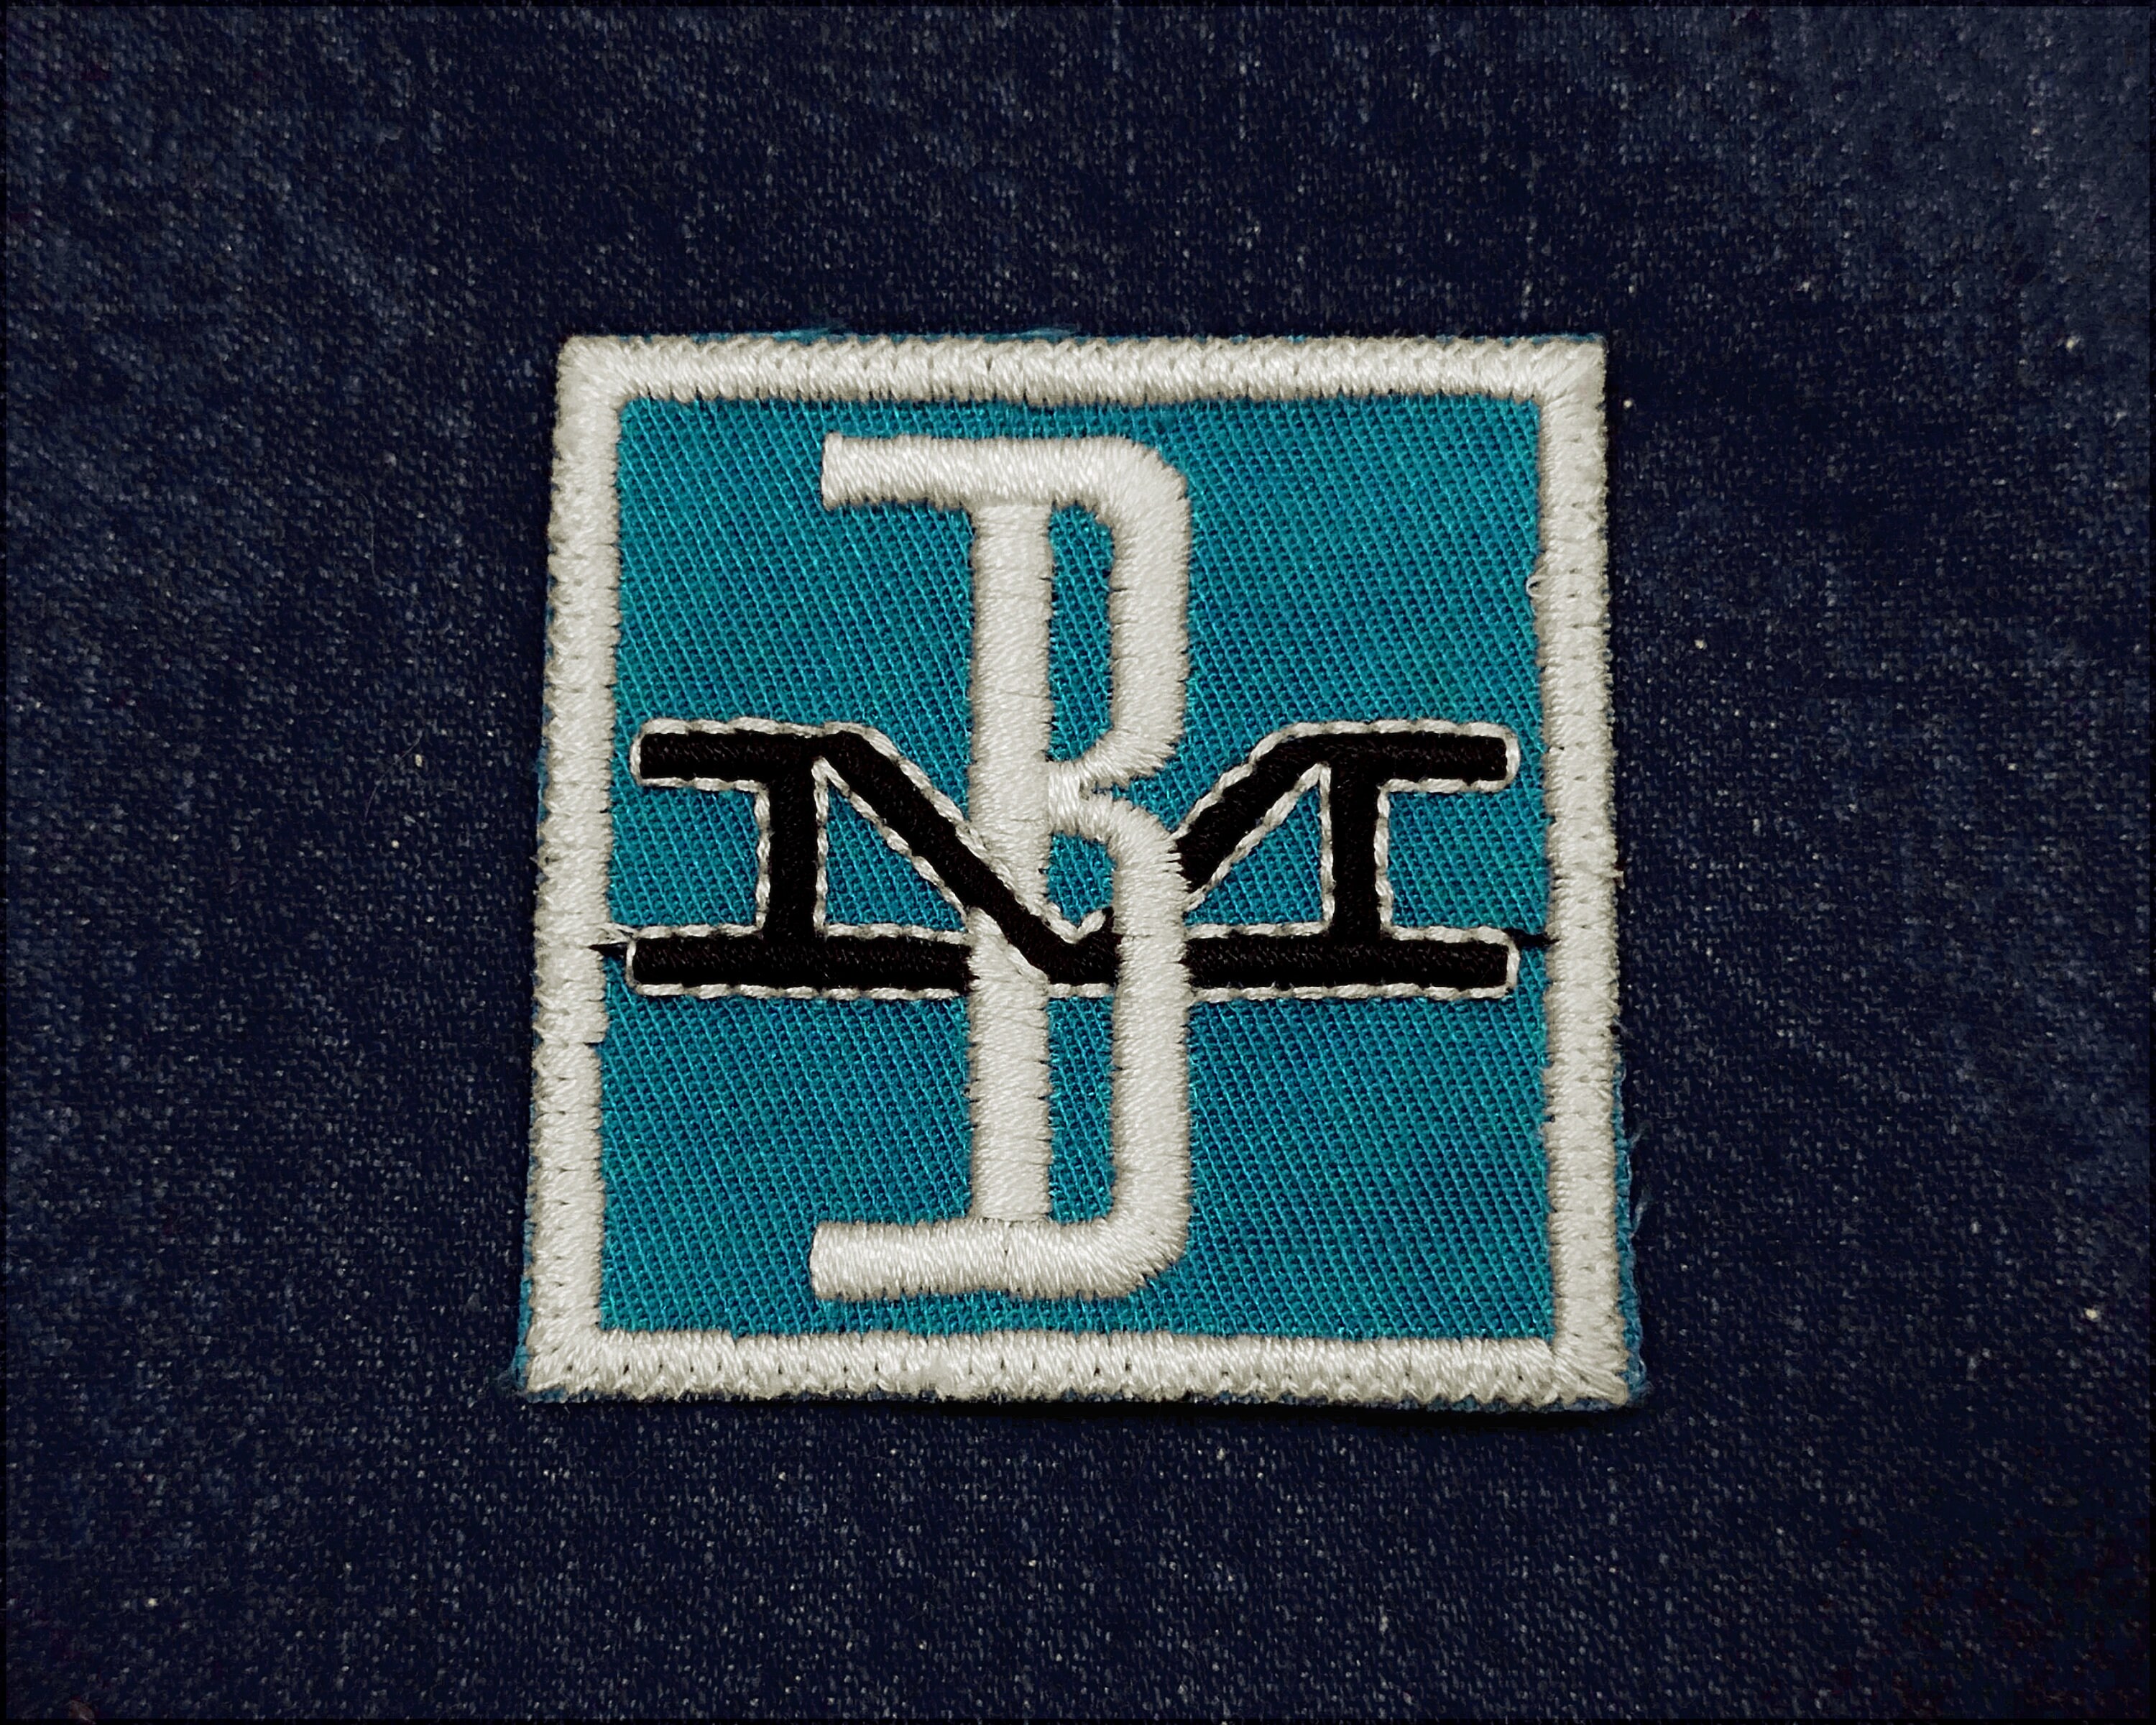 LeHigh Valley Railroad (Railway) Iron-On Embroidered Clothing Patch Train  Souvenir Logo Emblem Collectible Memorabilia Applique Gift Idea